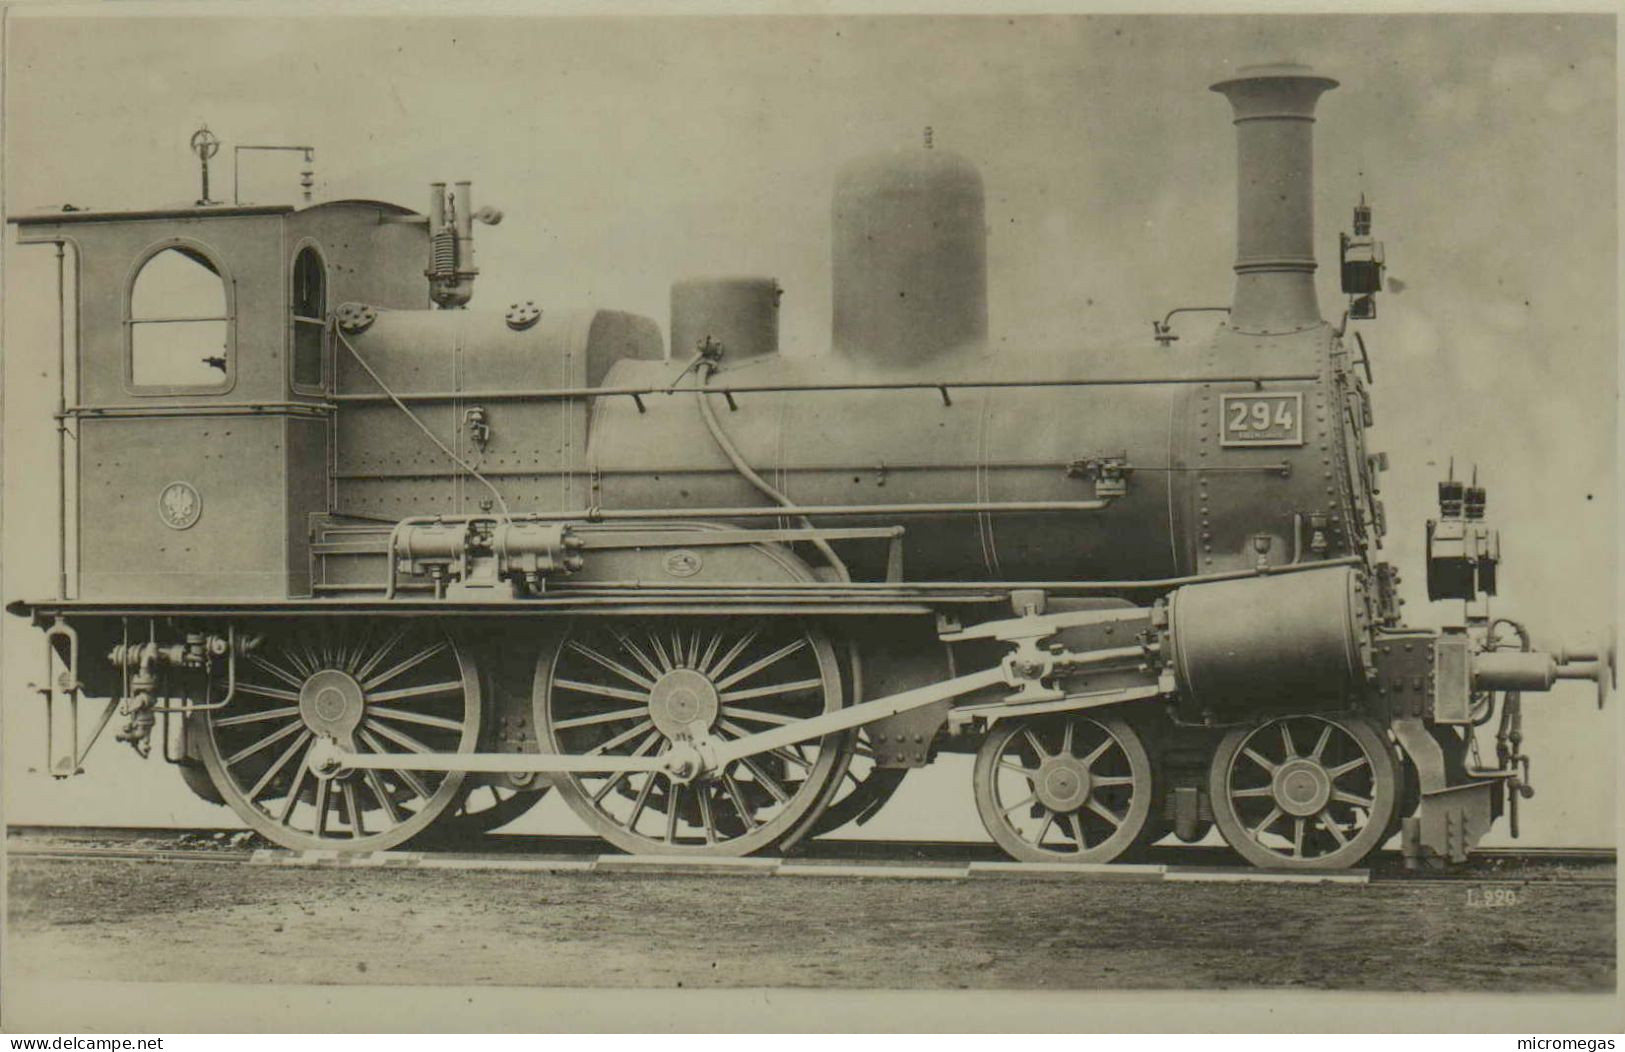 Reproduction - Locomotive Vulkan 1879 - Trains